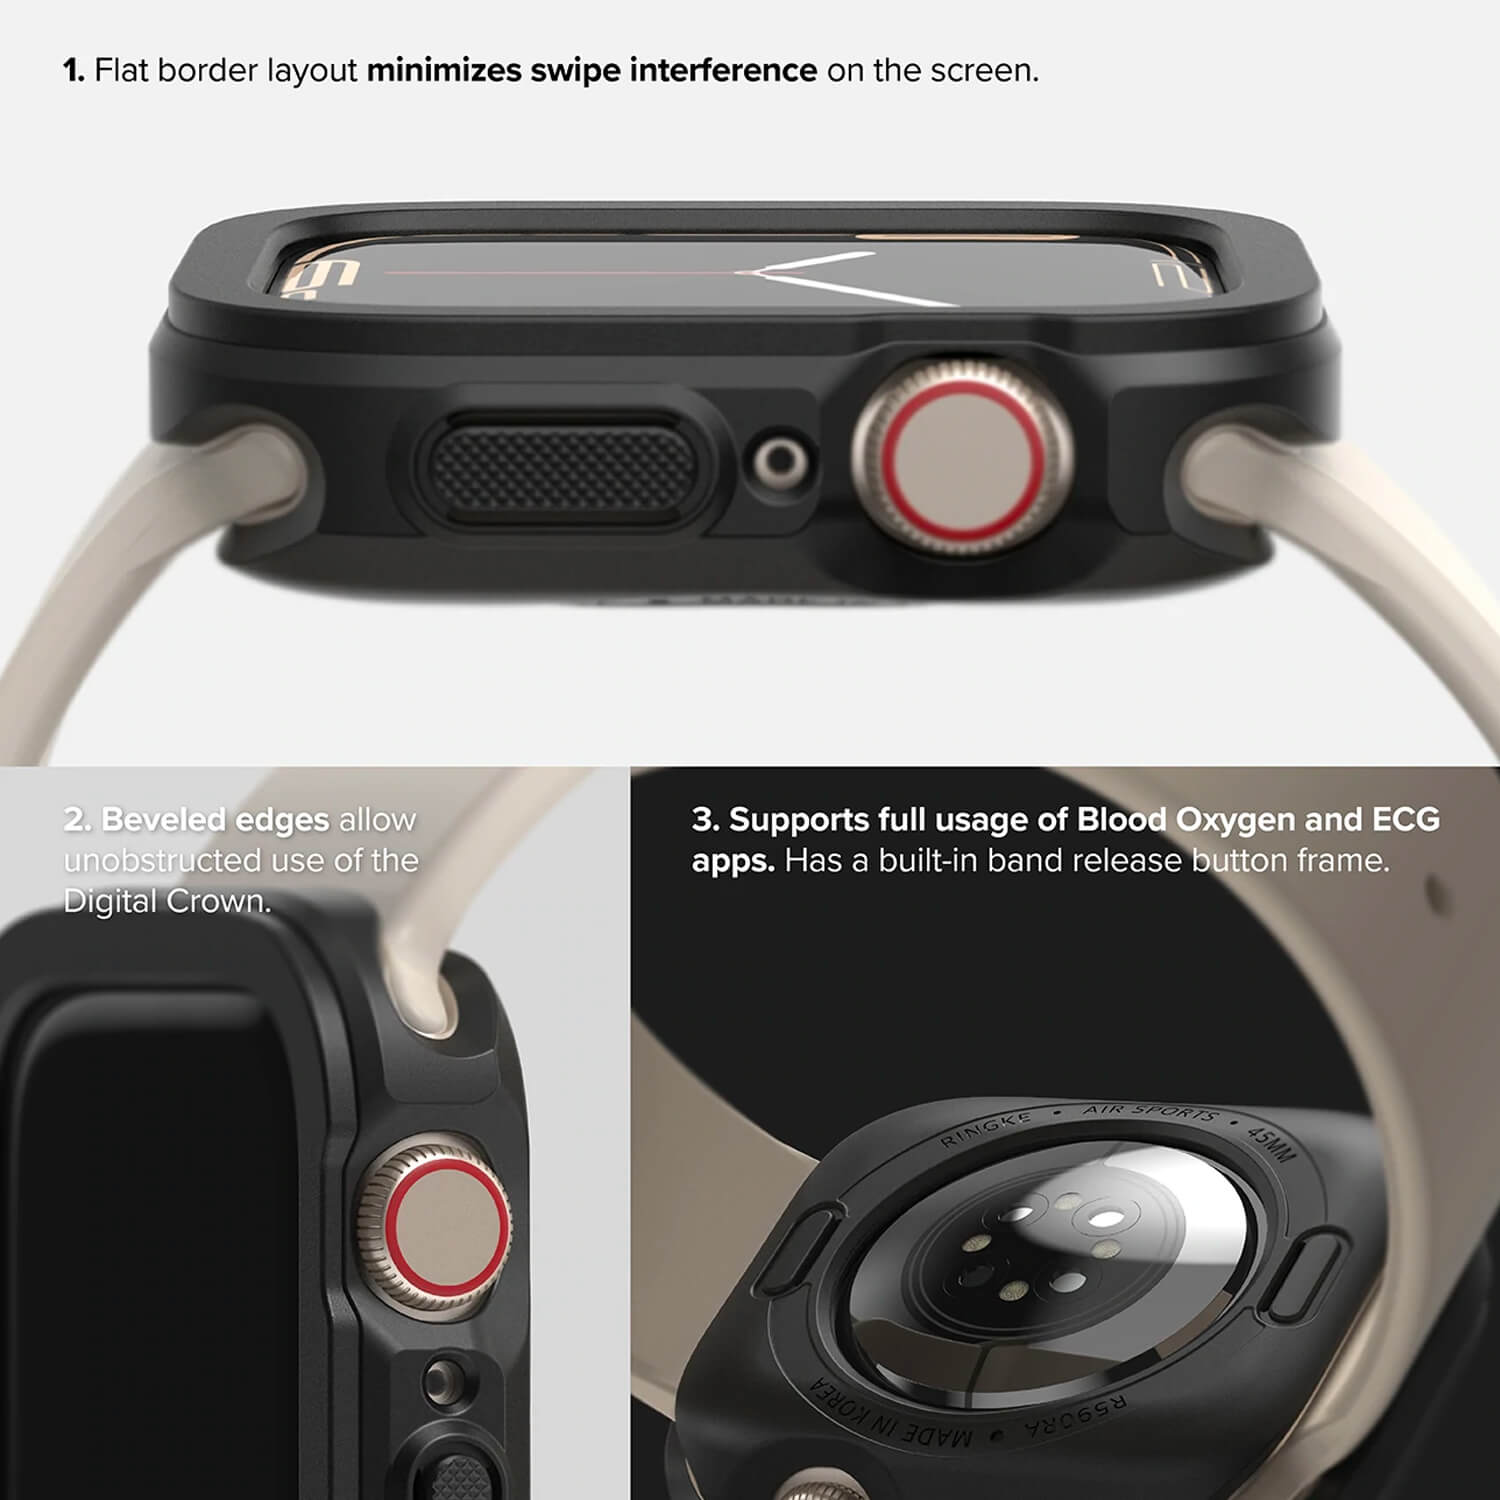 Ringke Apple Watch 9 / 8 / 7 41mm Case Air Sports Black